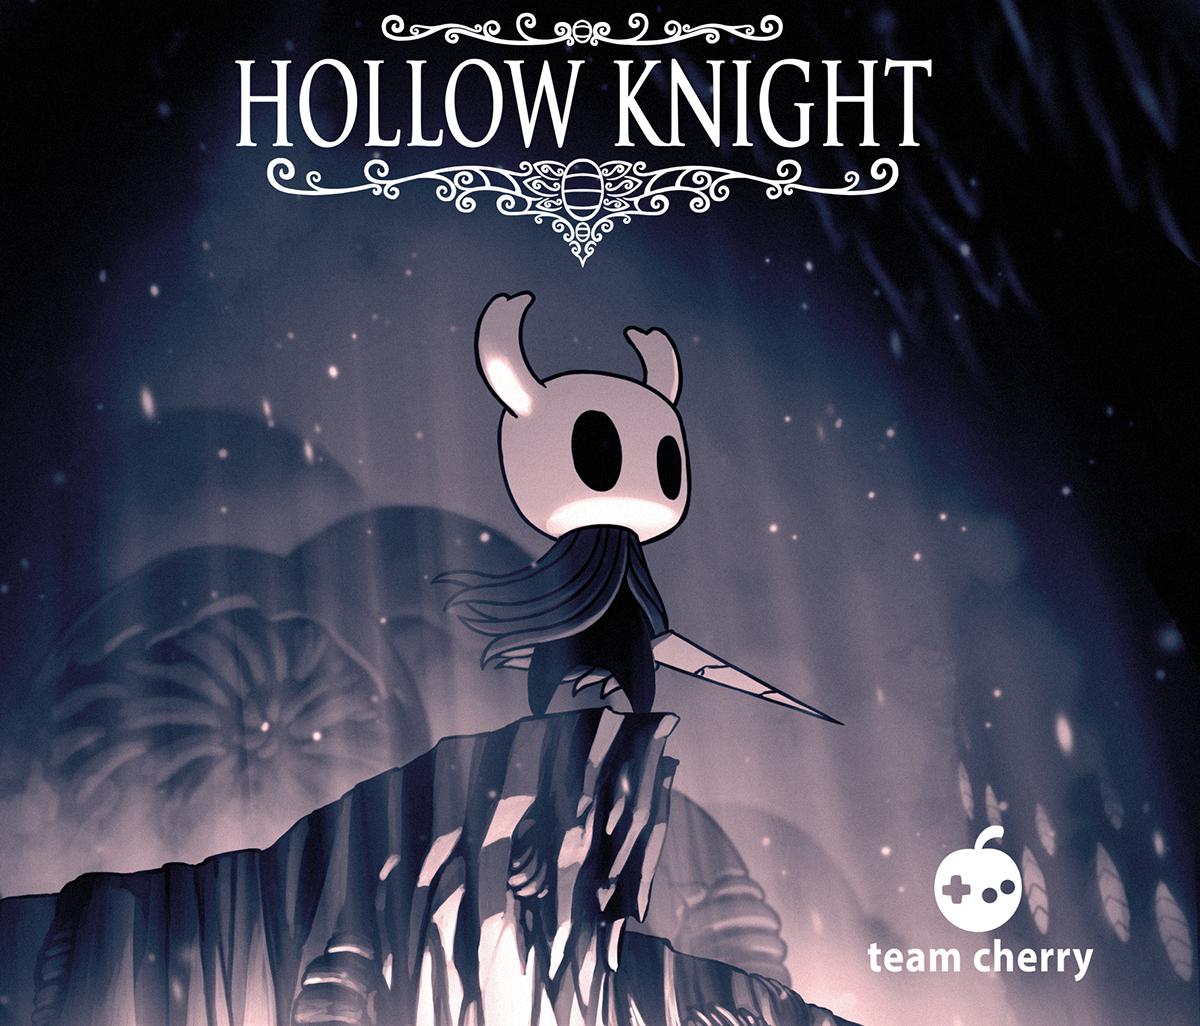 Hollow knight soundtrack cd